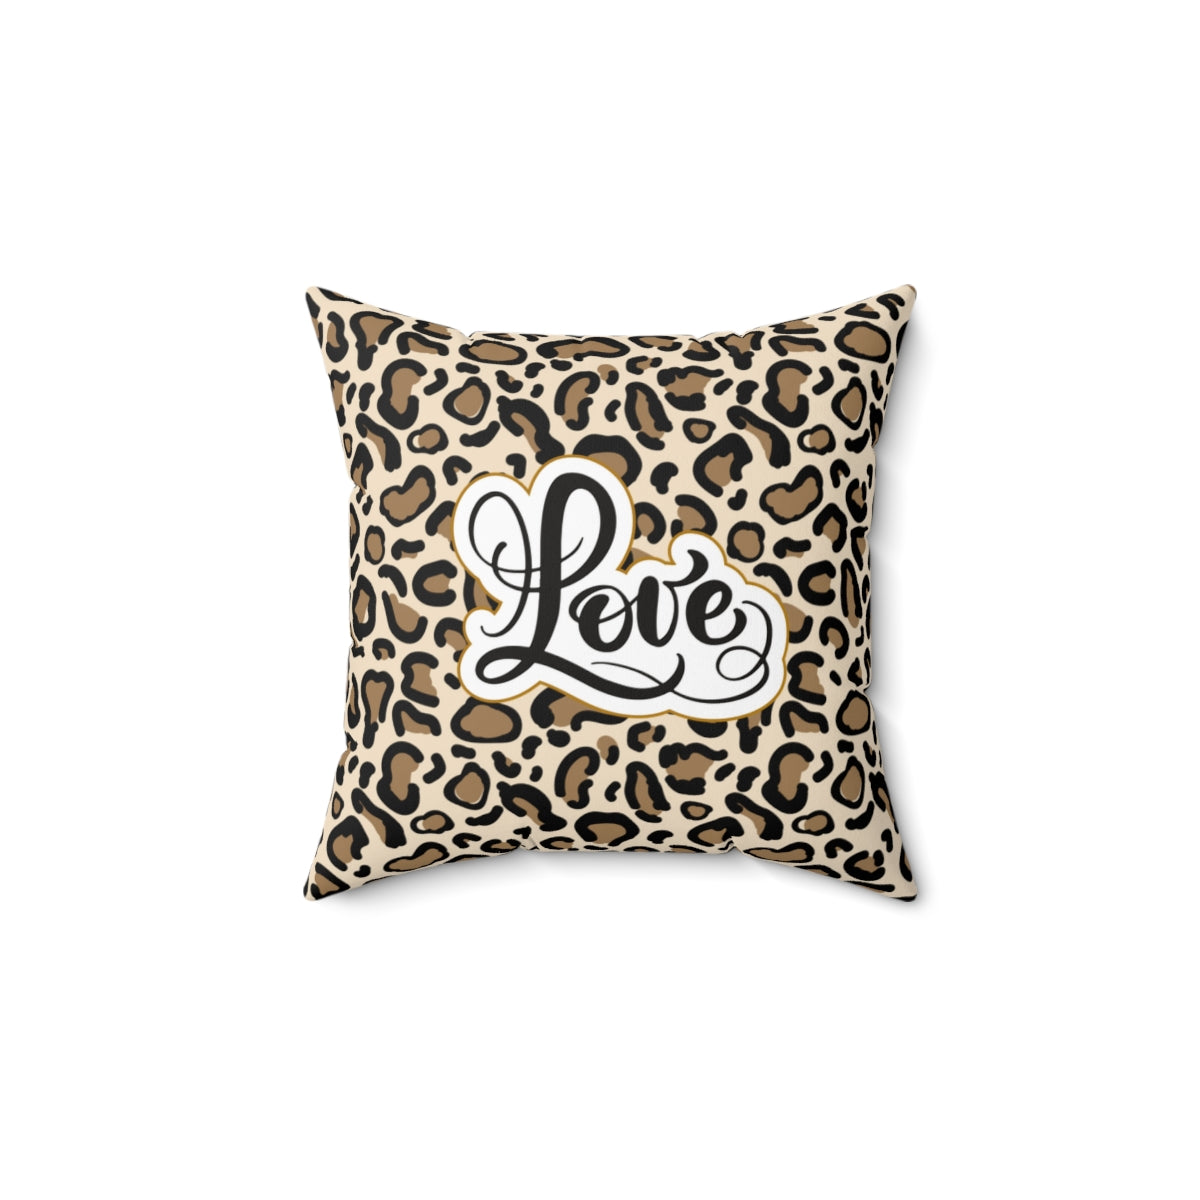 "Love" Leopard prints design Spun Polyester Square Pillow